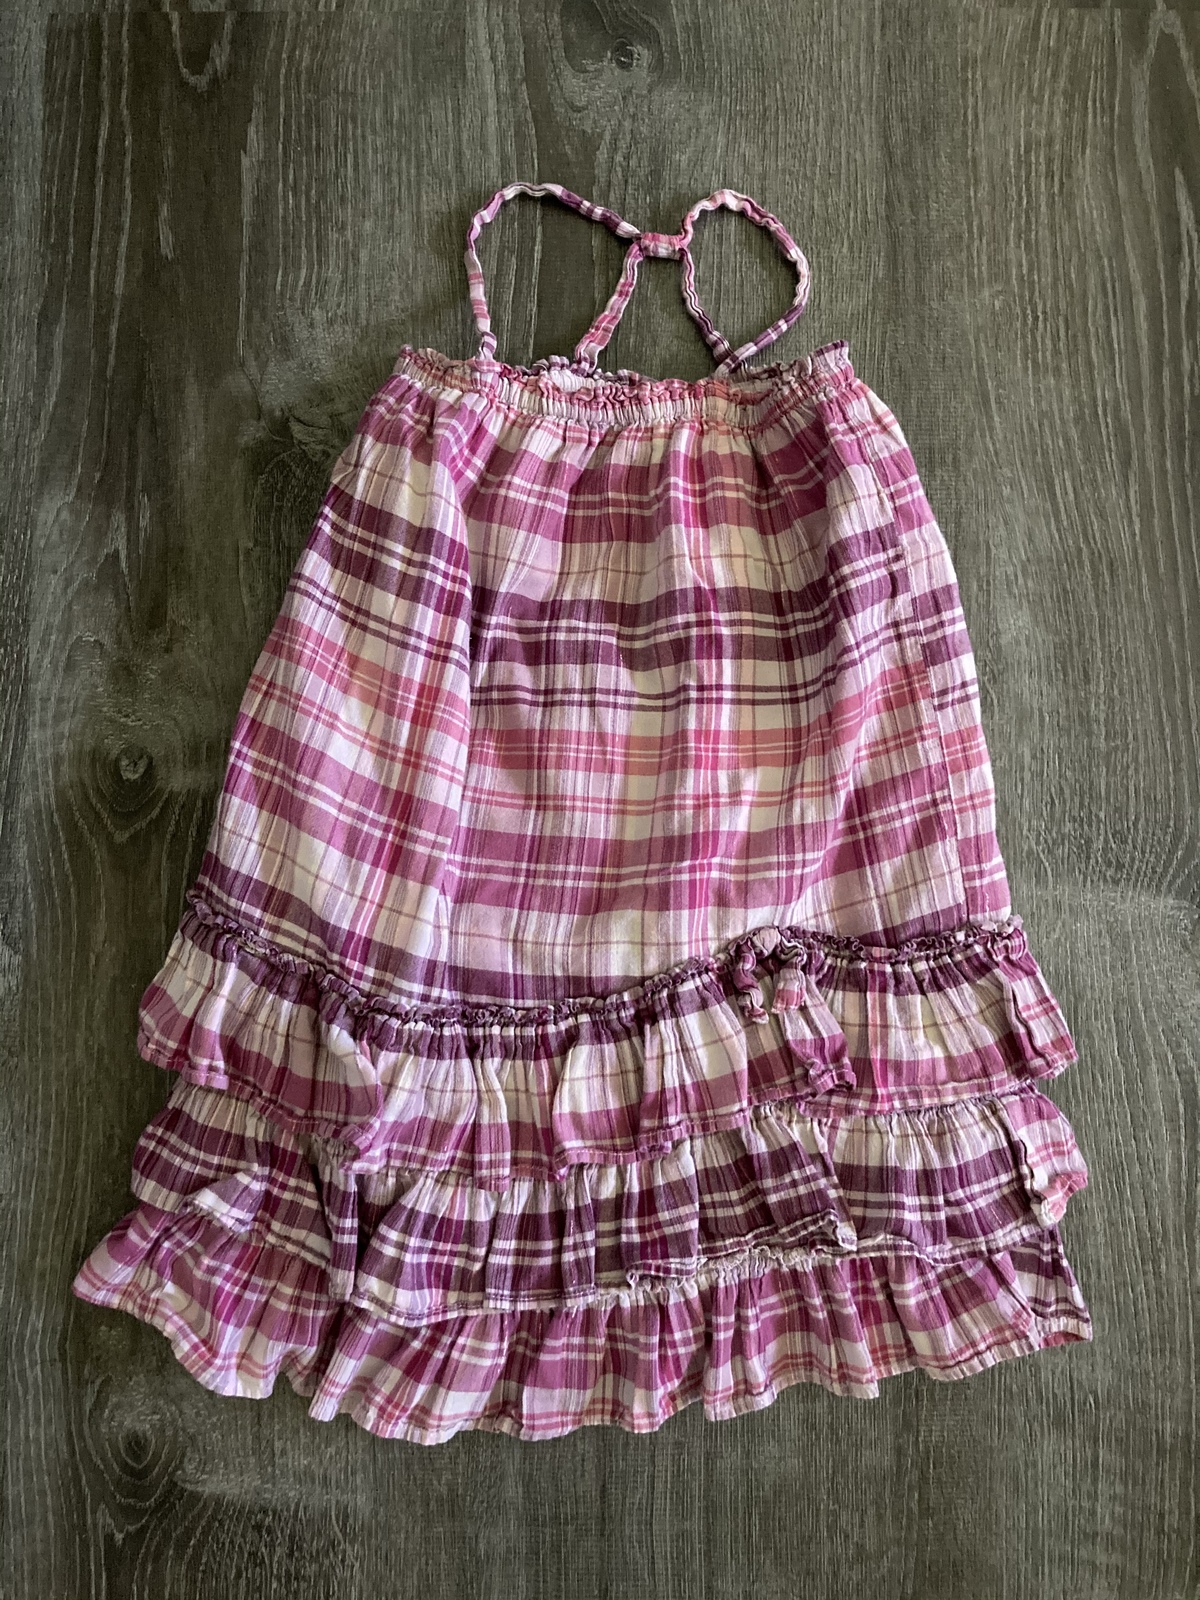 Baby Gap Spaghetti Strap Dress Size 5 - $10.99